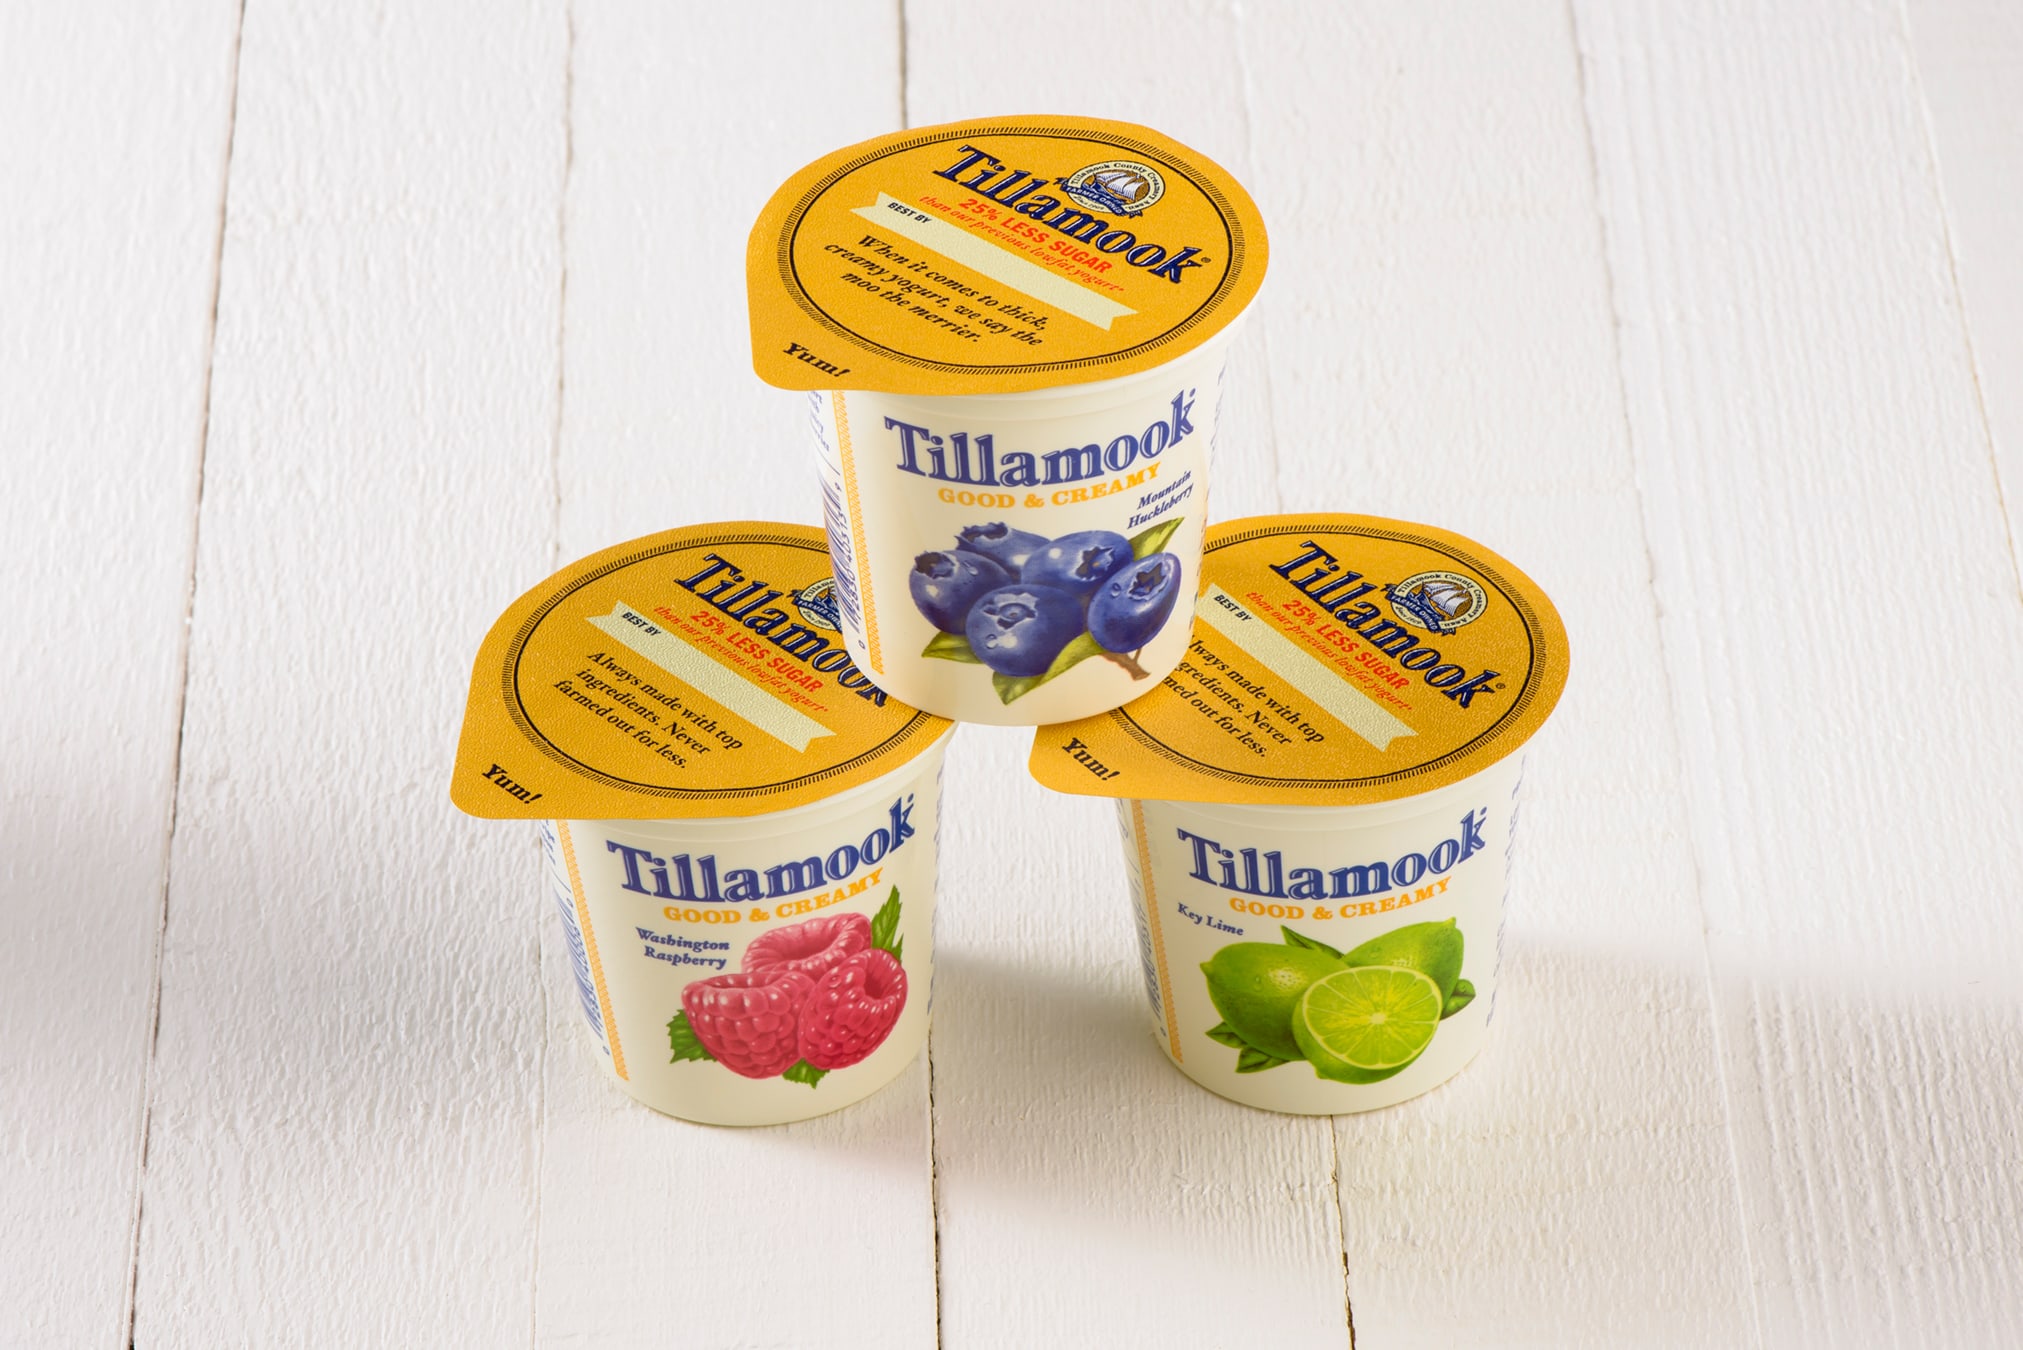 Tillamook yogurt packaging design